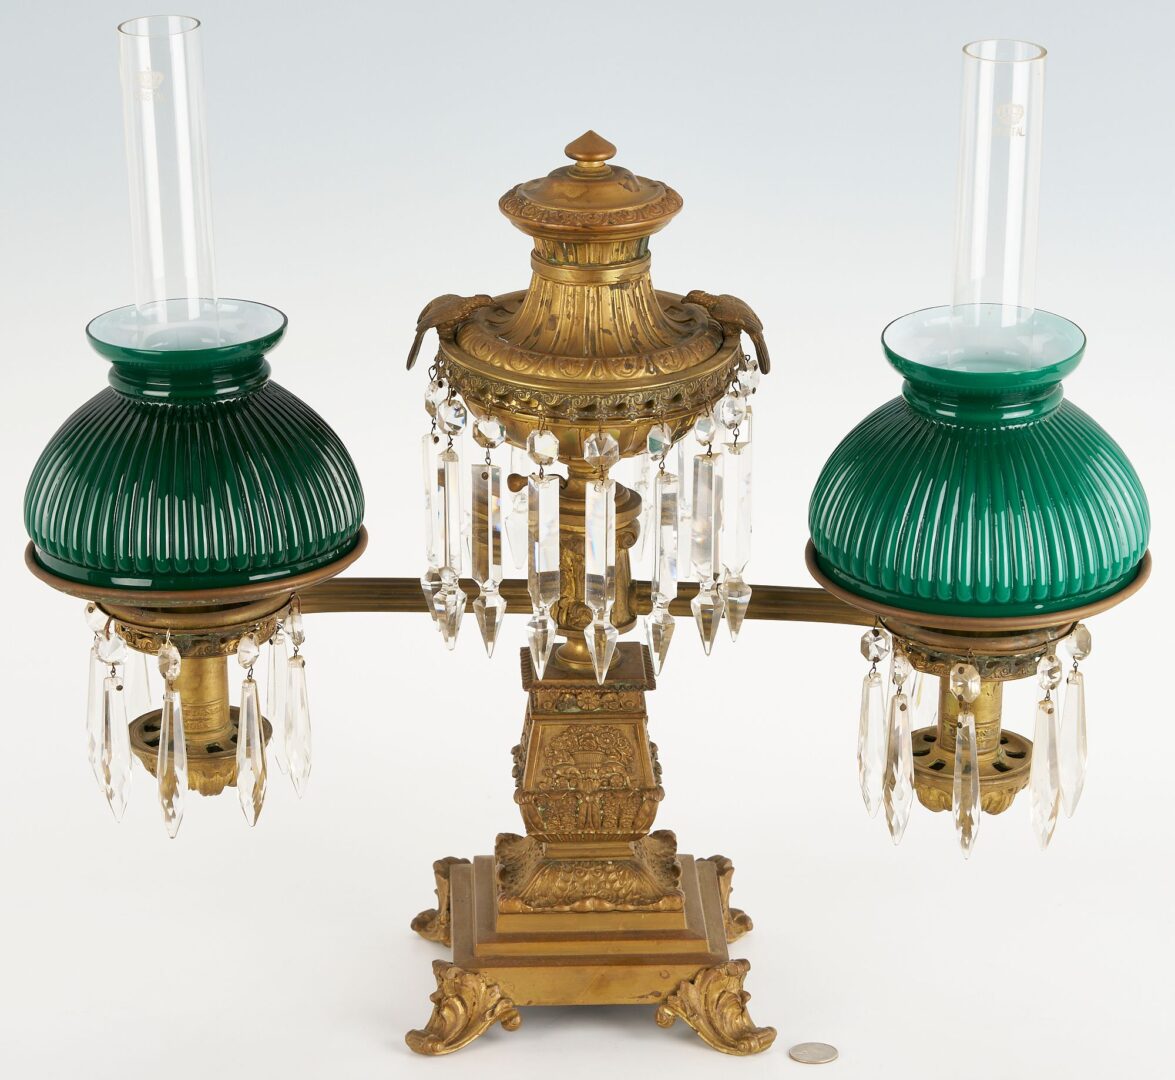 Lot 87: Baldwin Gardiner Brass Argand Lamp, SC History